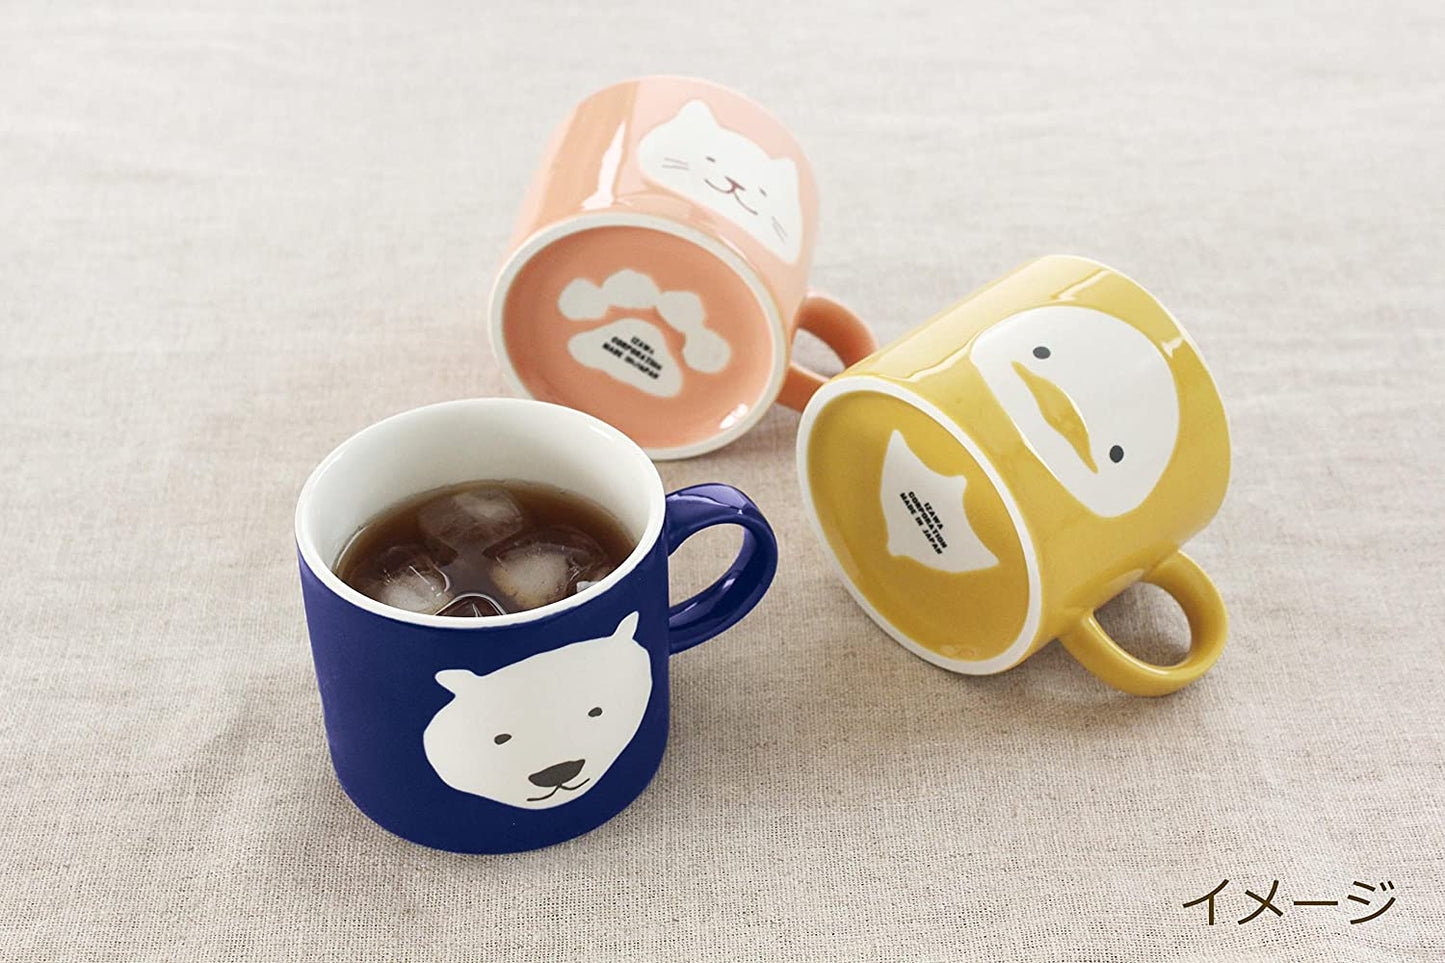 Minoyaki Easy Zoo Mug-Panda日本美浓烧轻松动物园马克杯咖啡杯-熊猫